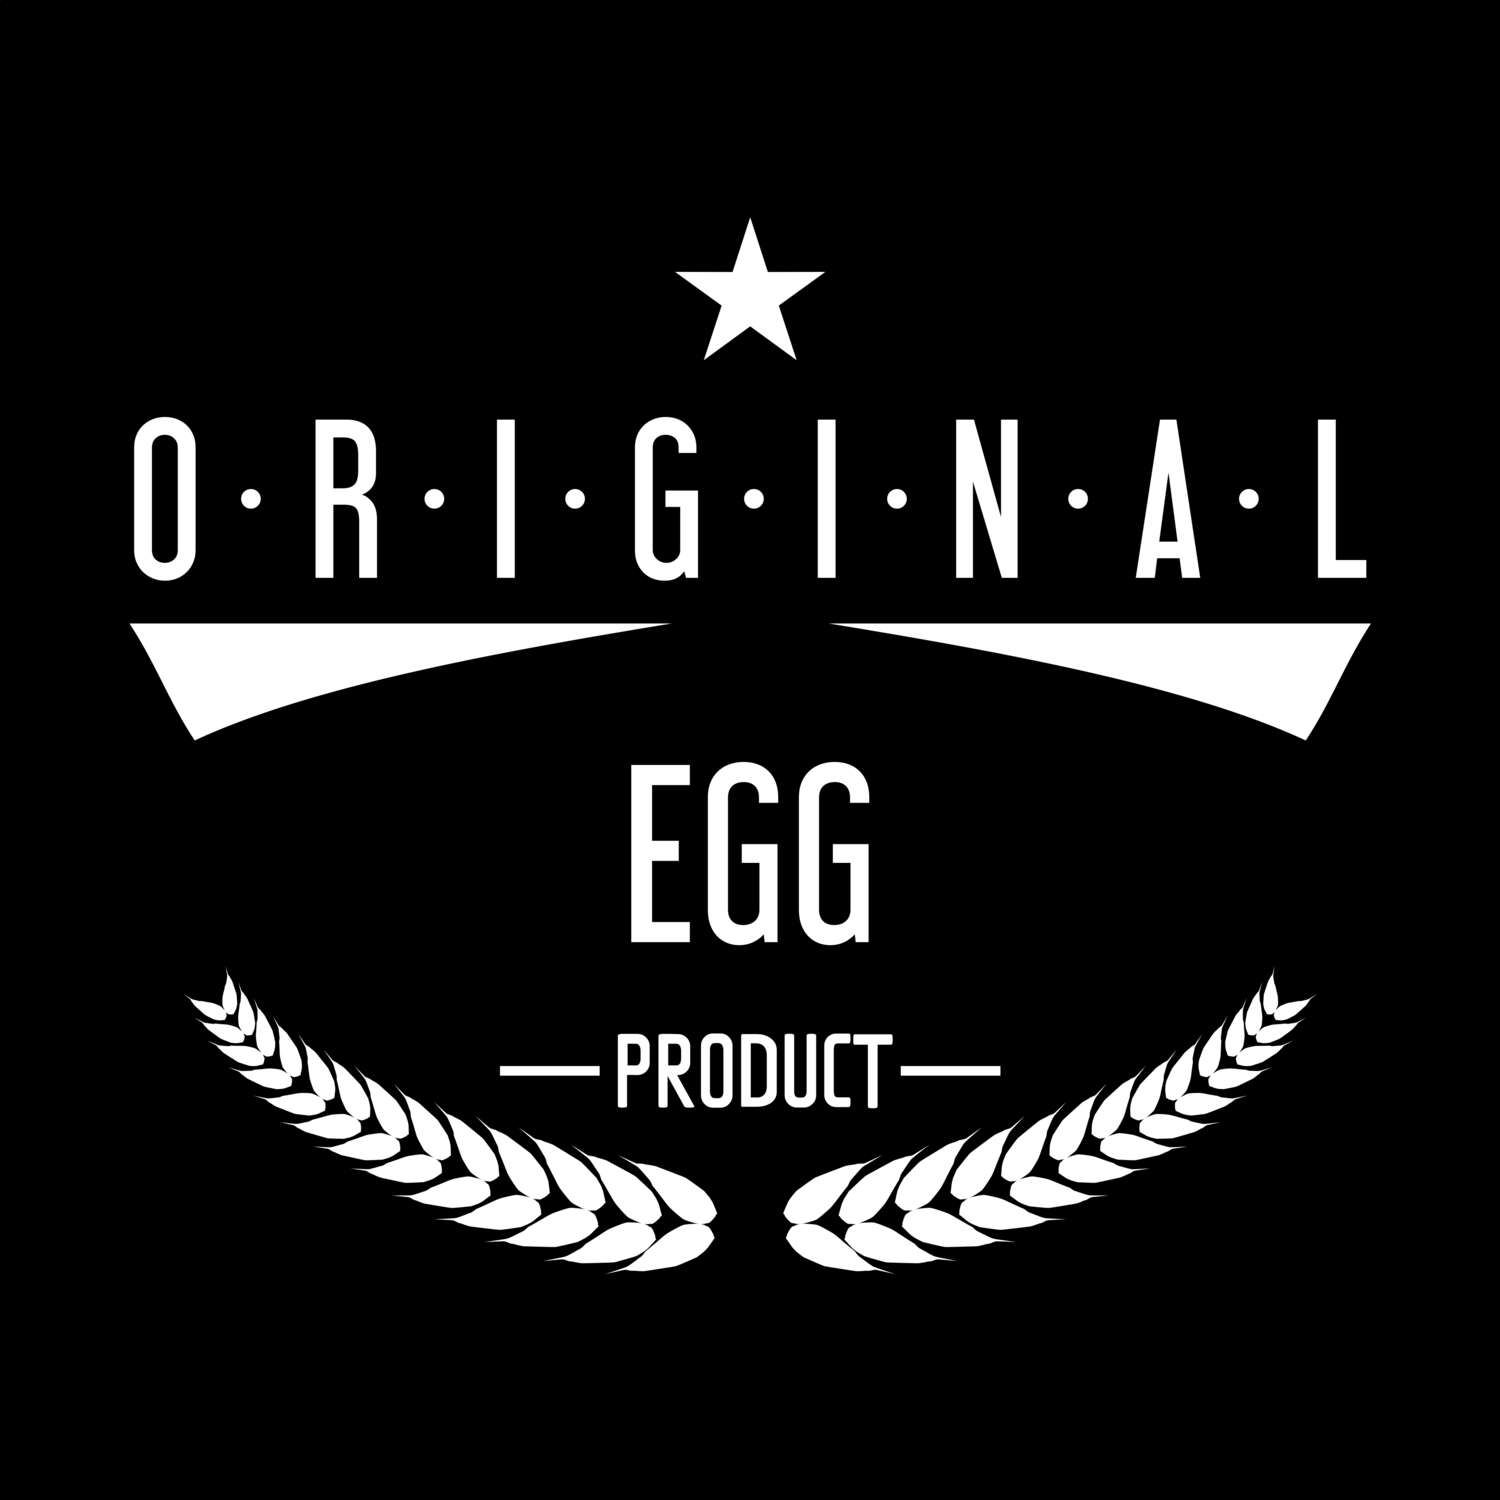 Egg T-Shirt »Original Product«